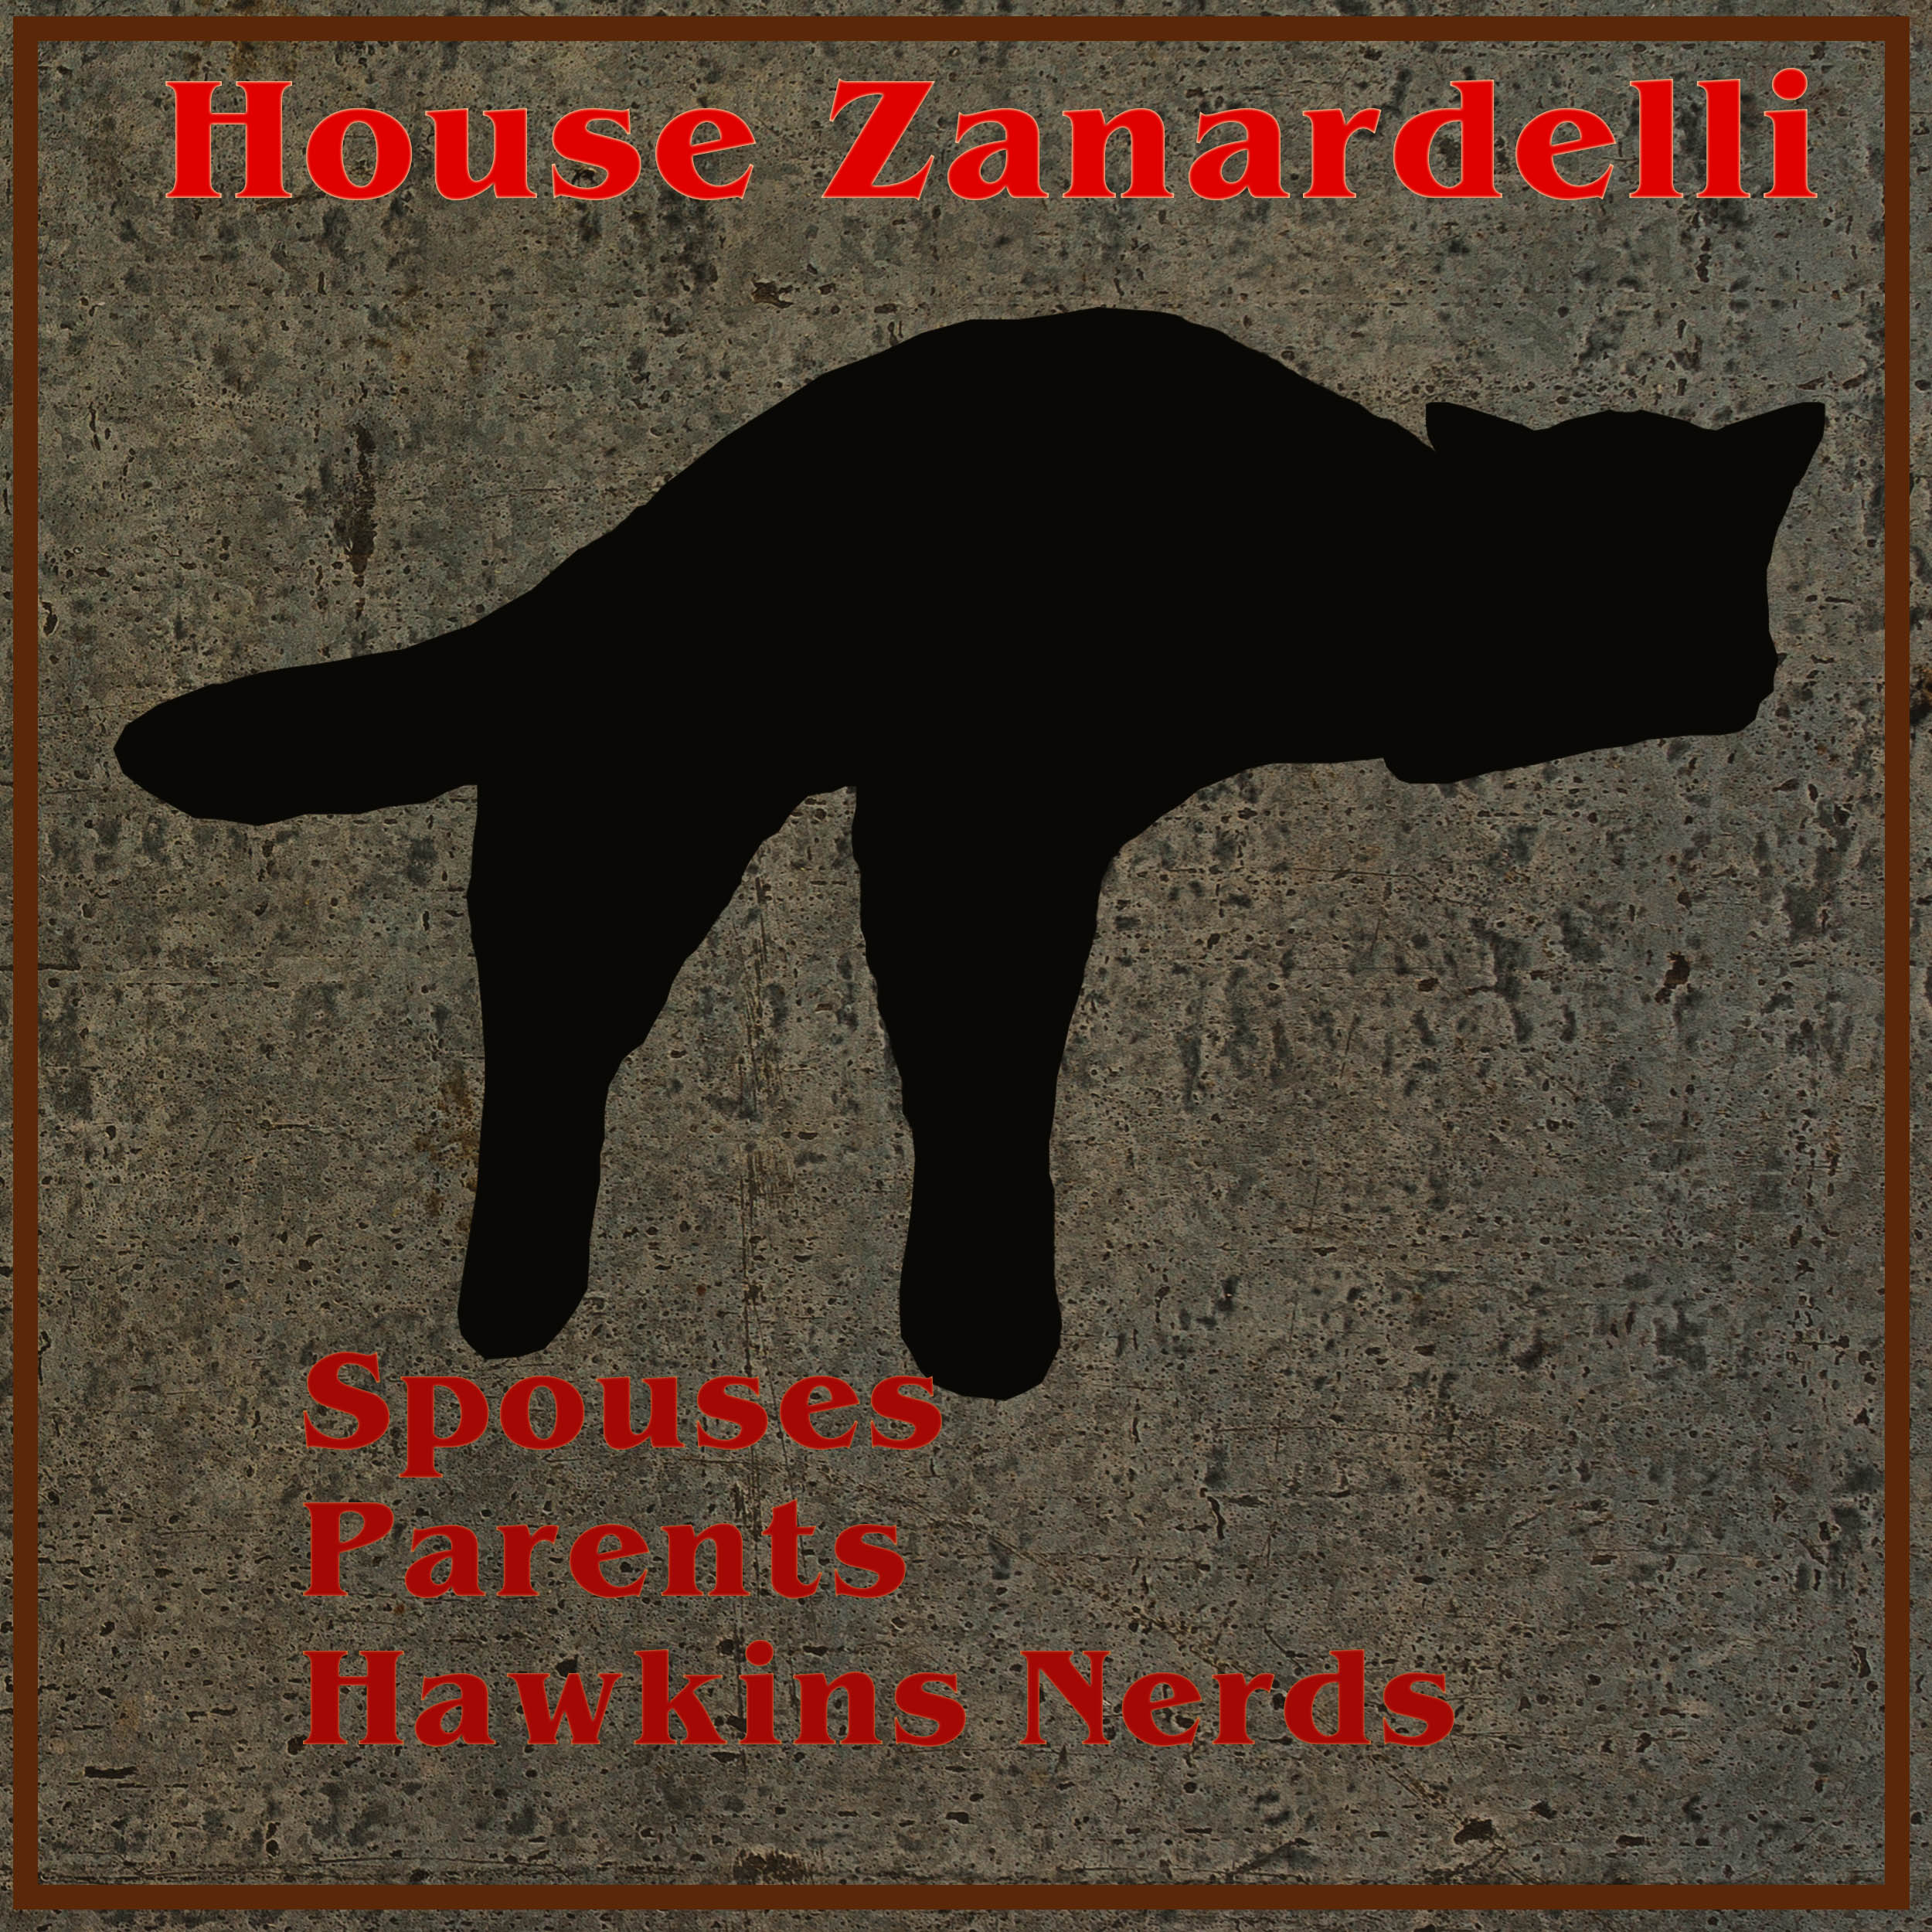 4MWG Presents - House Zanardelli - Stranger Things Season 2 Binge Watch